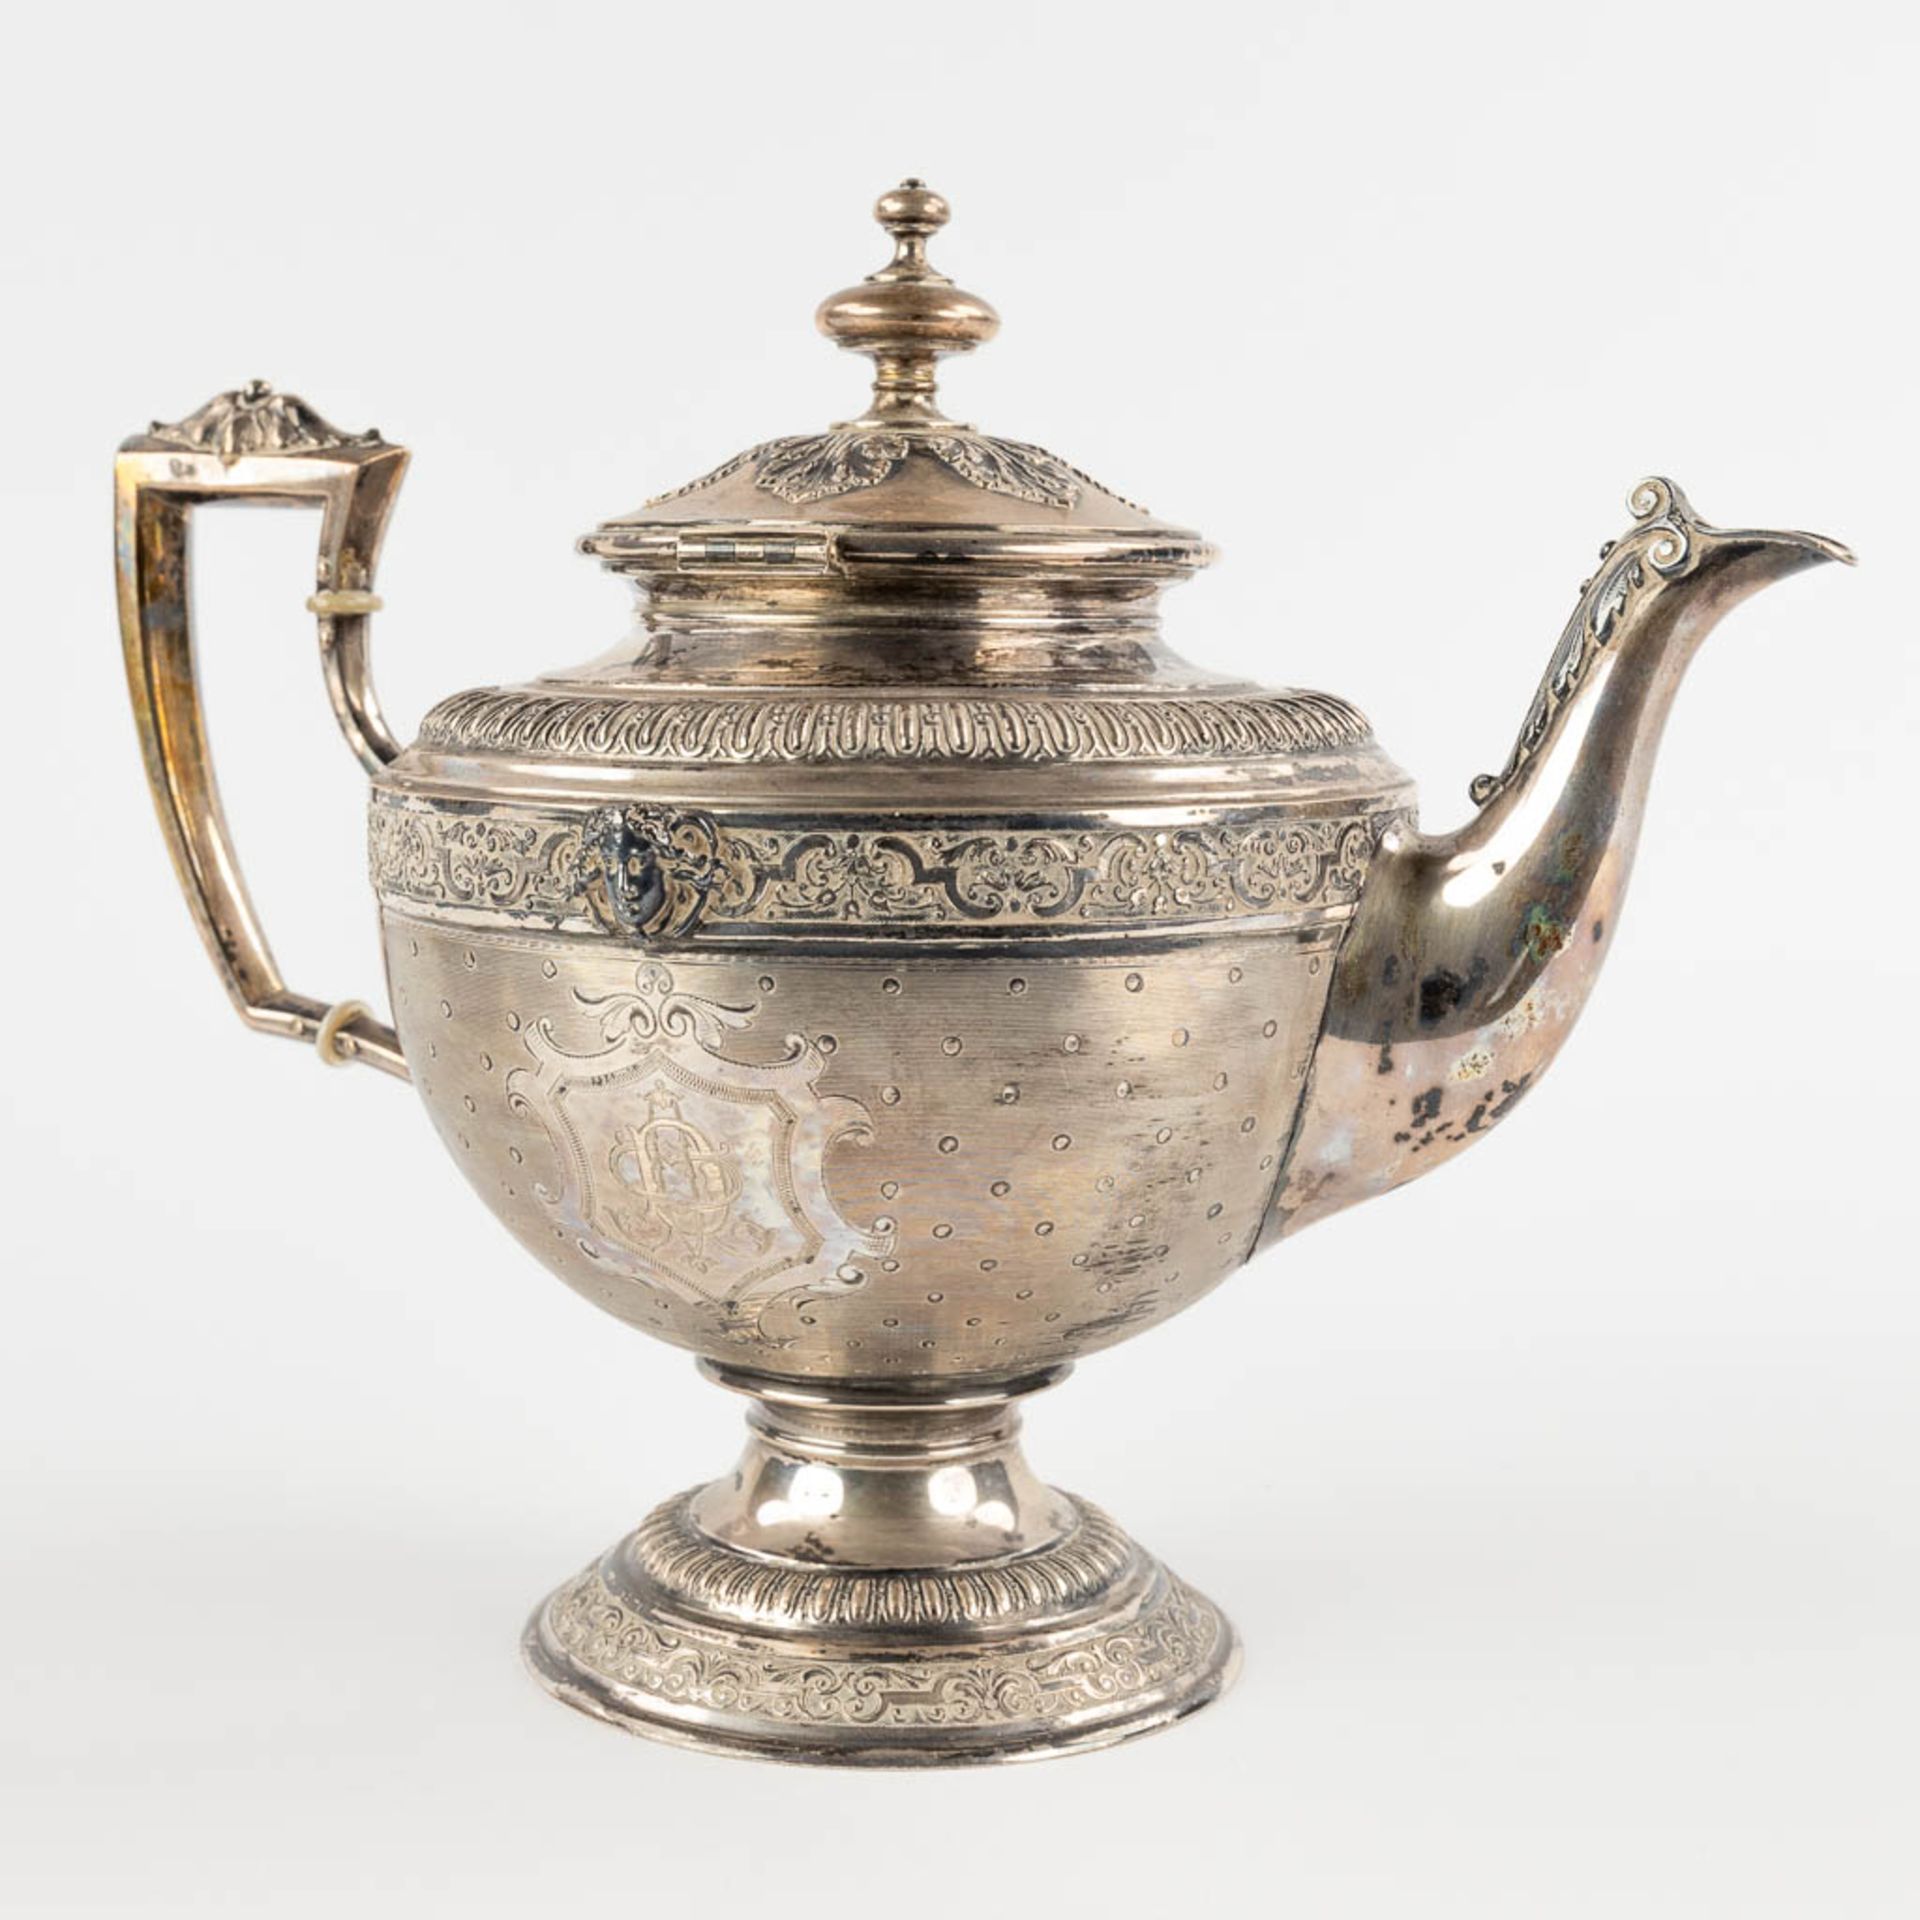 A teapot, silver, Germany. Gross: 659g. (D:16 x W:26 x H:21 cm)